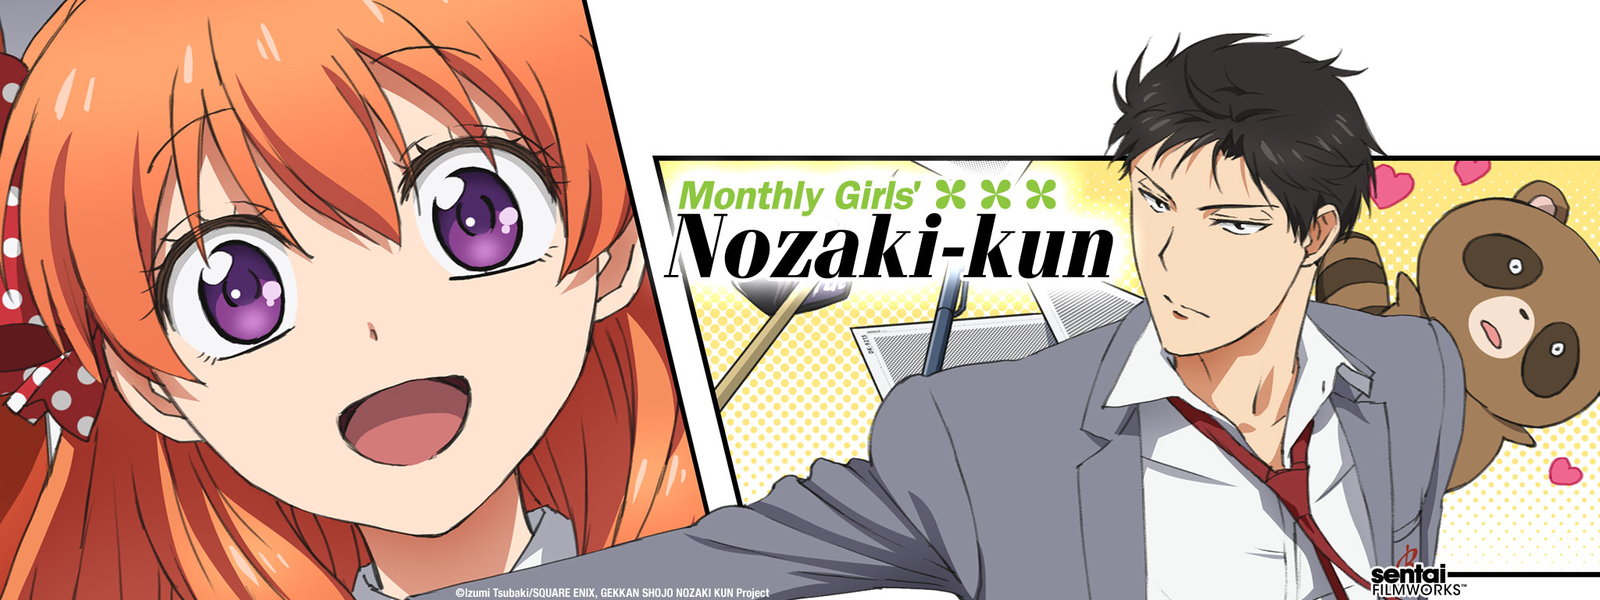 Monthly Girls' Nozaki-kun #23